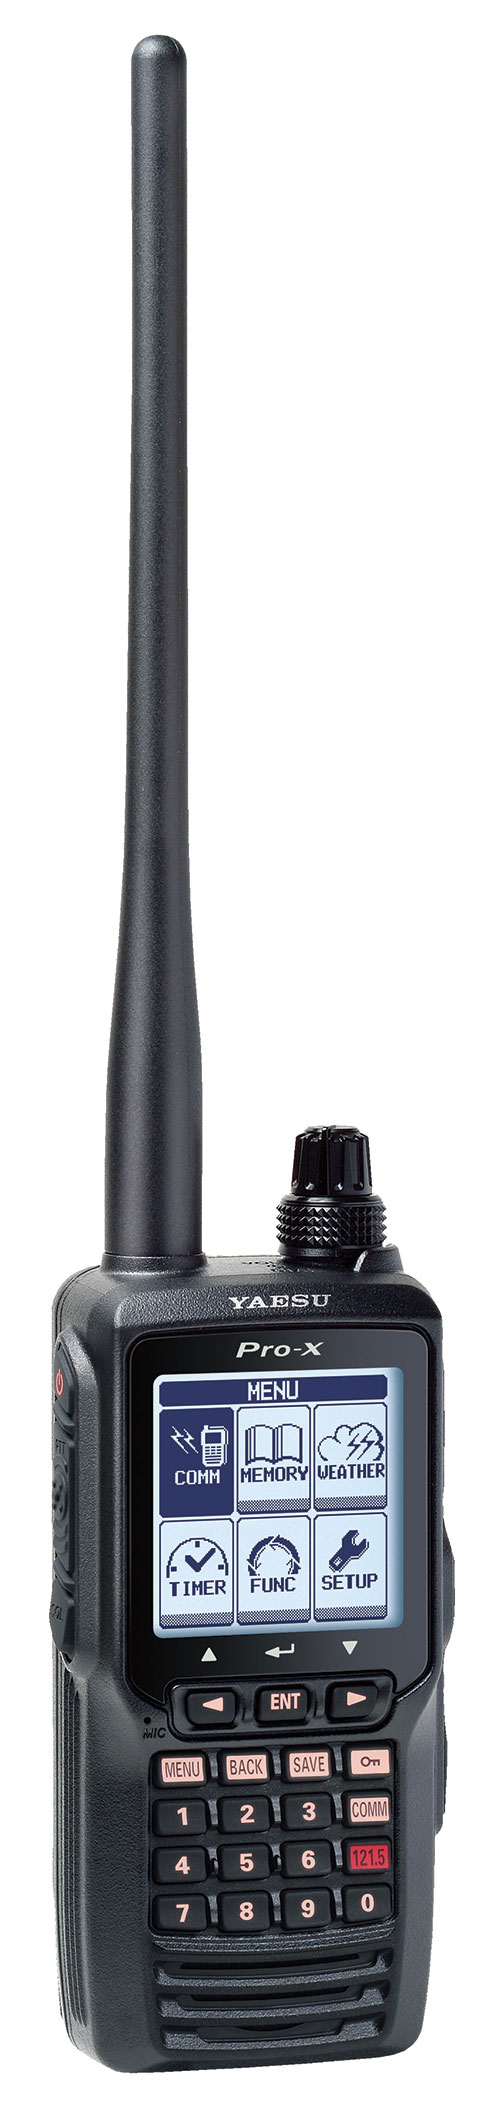 Yaesu FTA 550L VHF Handheld TransceiverImage Id:129744